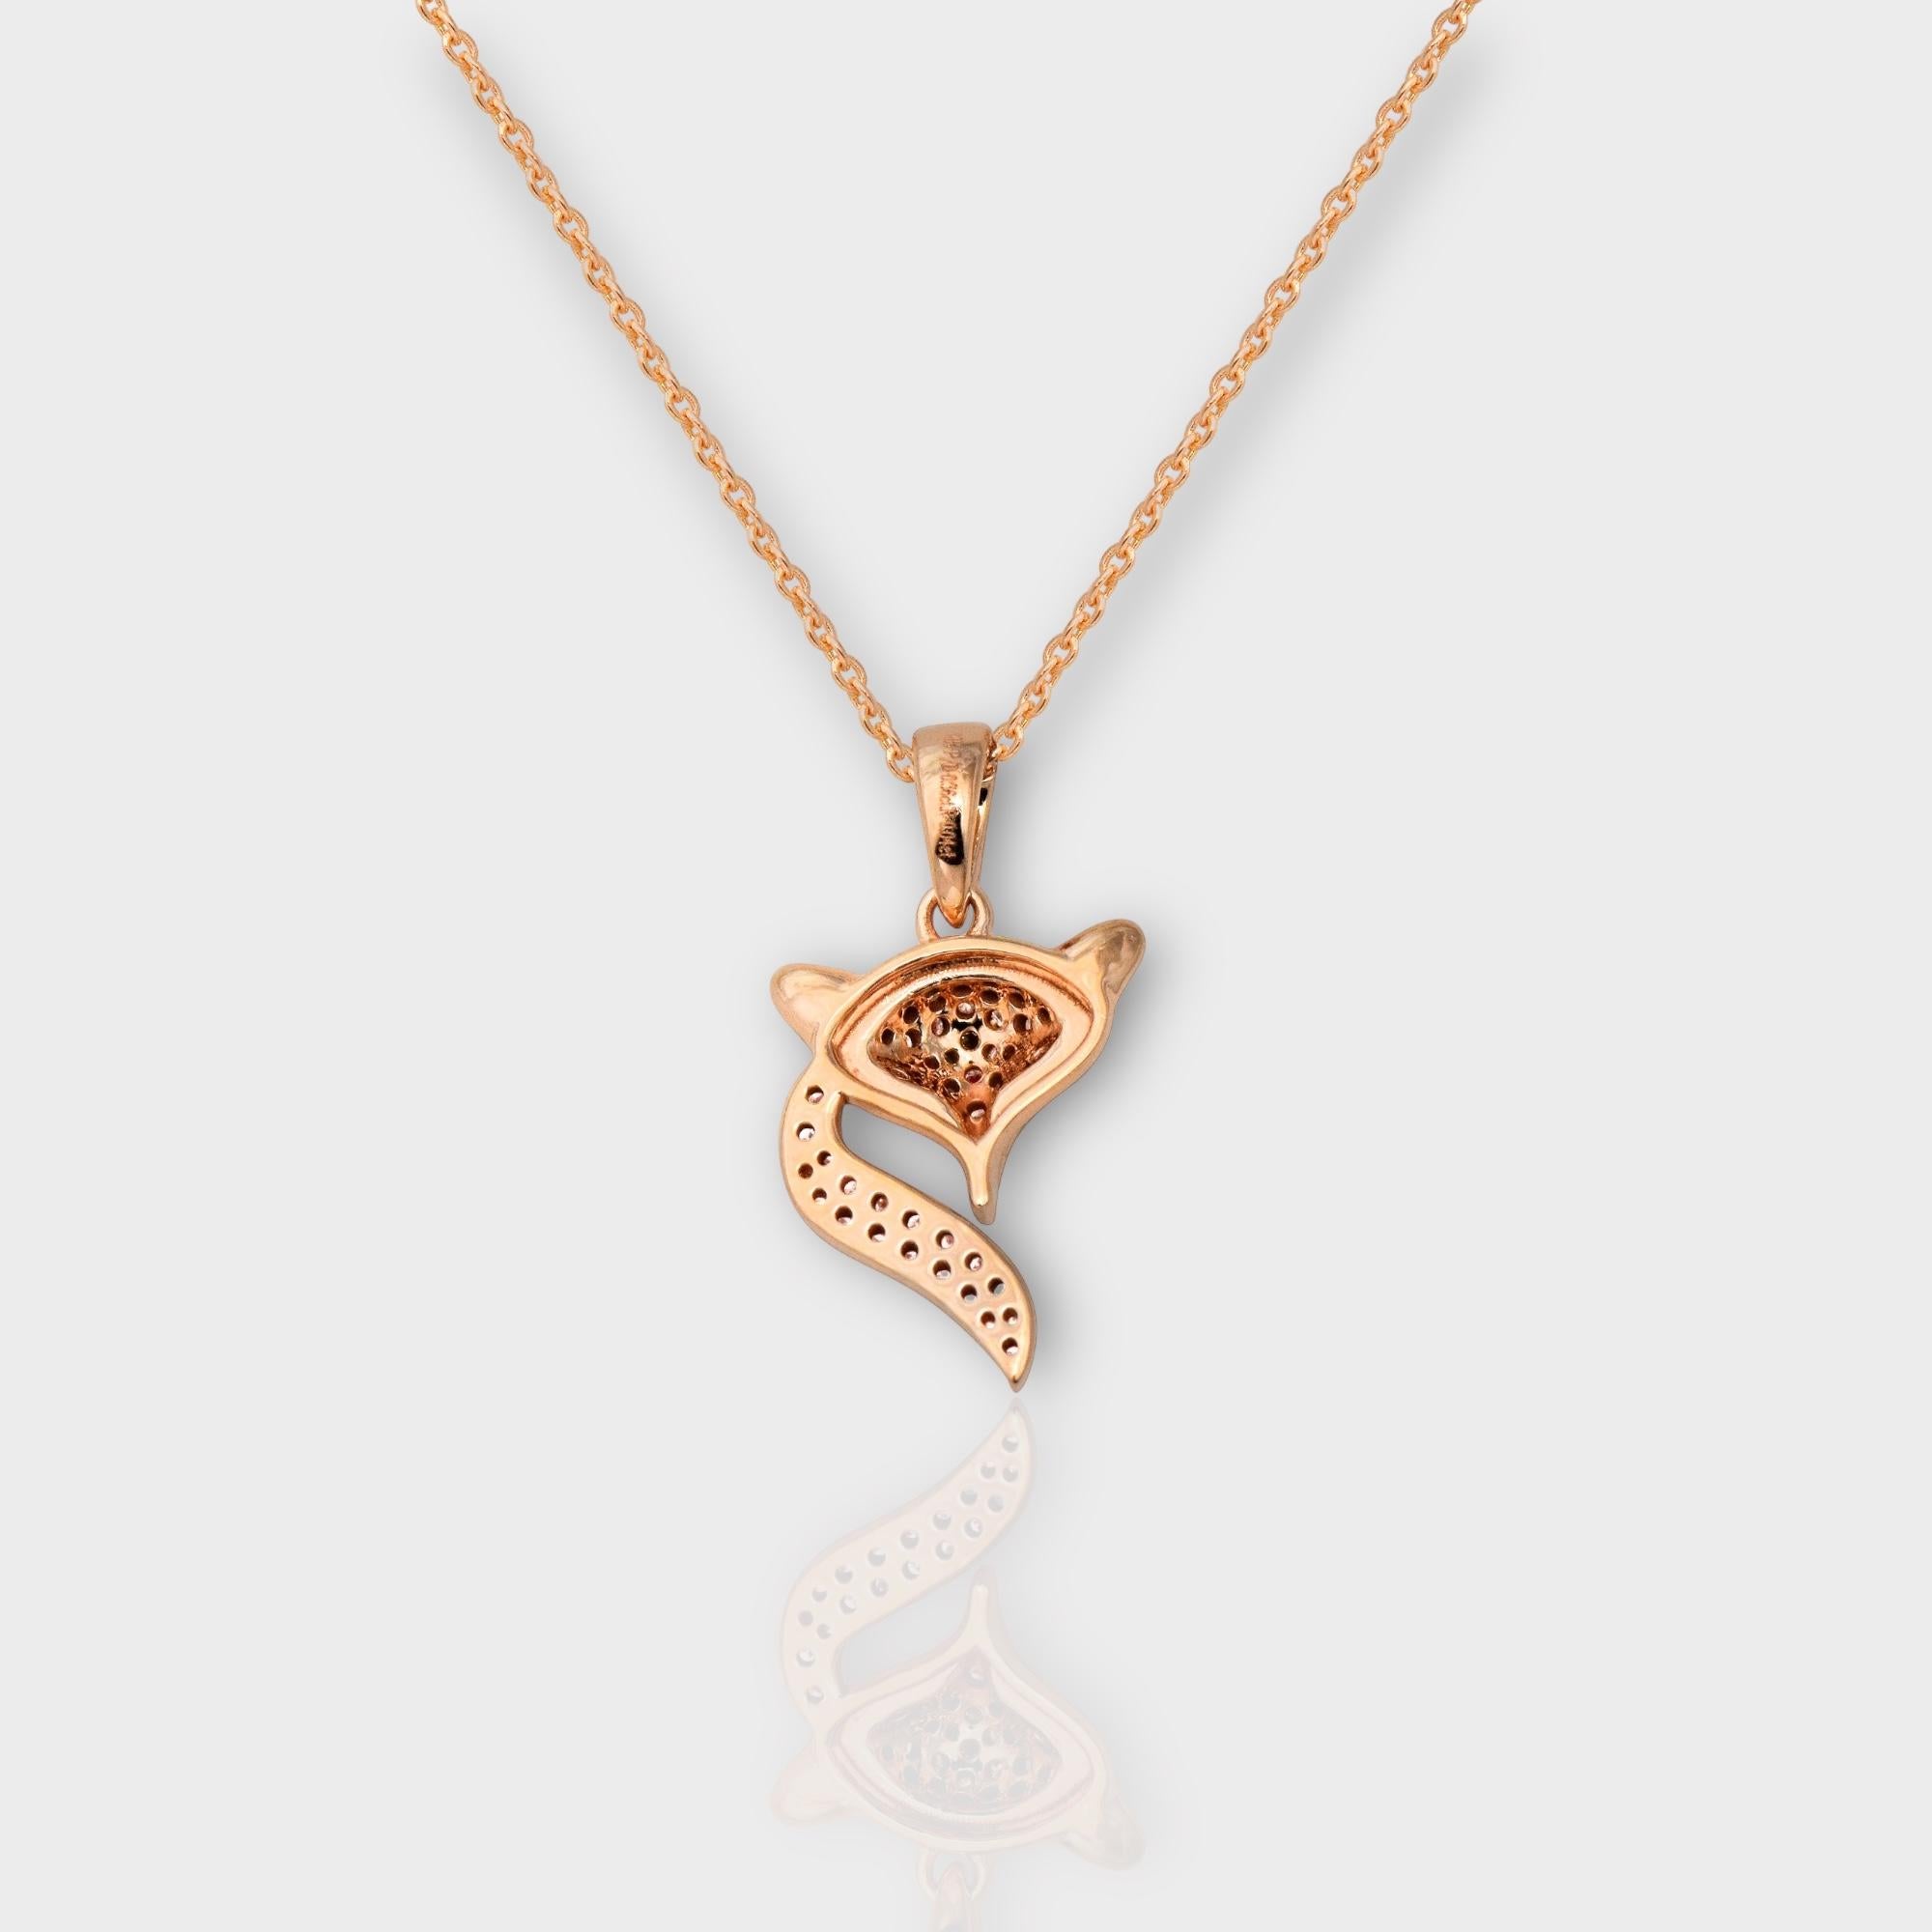 IGI 14K 0.36 ct Natural Pink Diamonds Fox Design Pendant Necklace For Sale 3